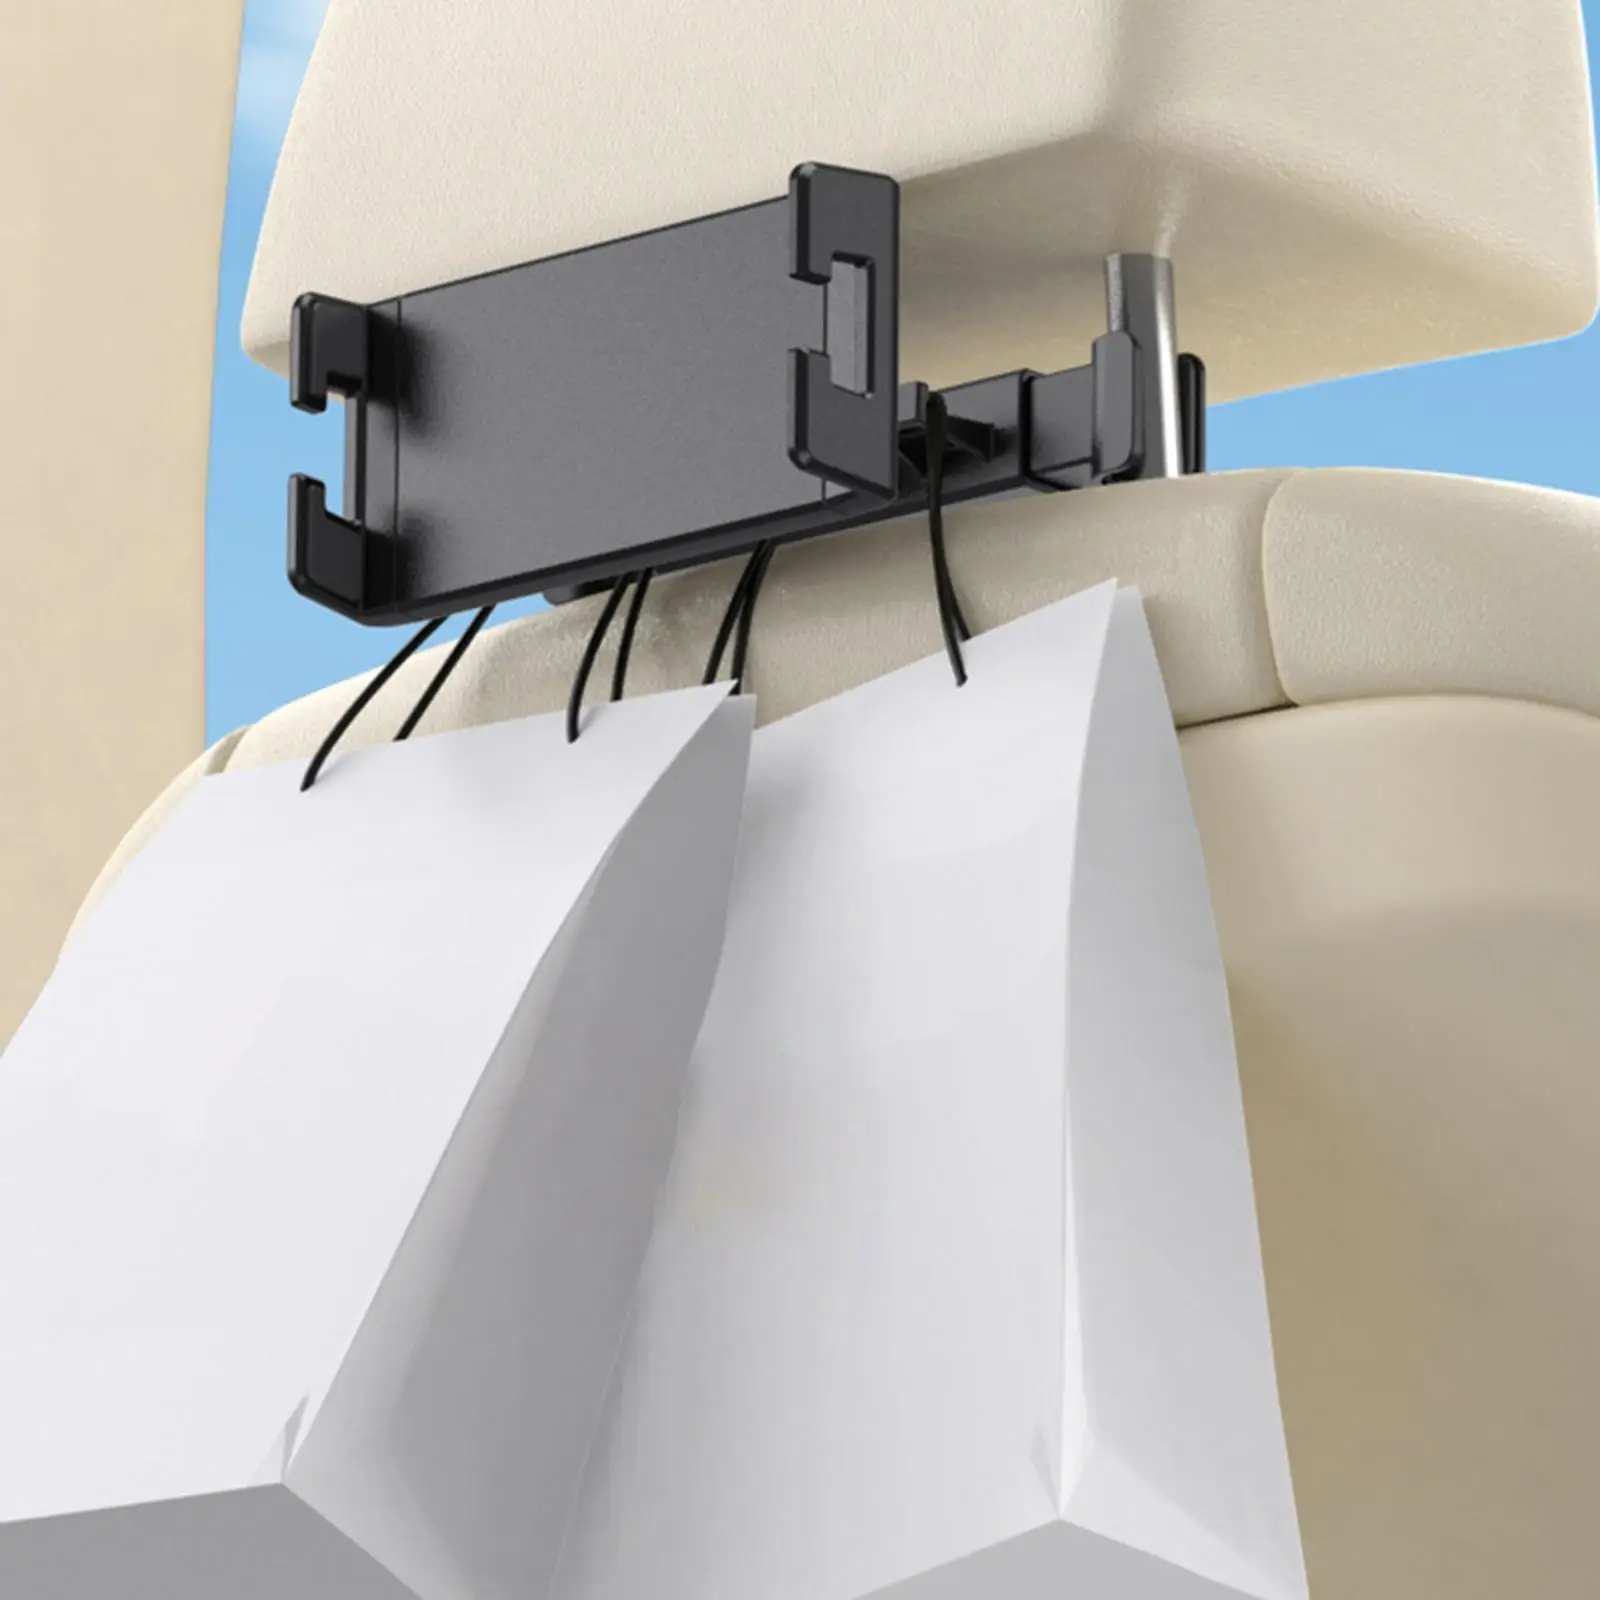 Car Headrest Mount Tablet Holder Universal Tablet Stand Cradle for 5.8-12.9Inches Smartphones tablet Devices